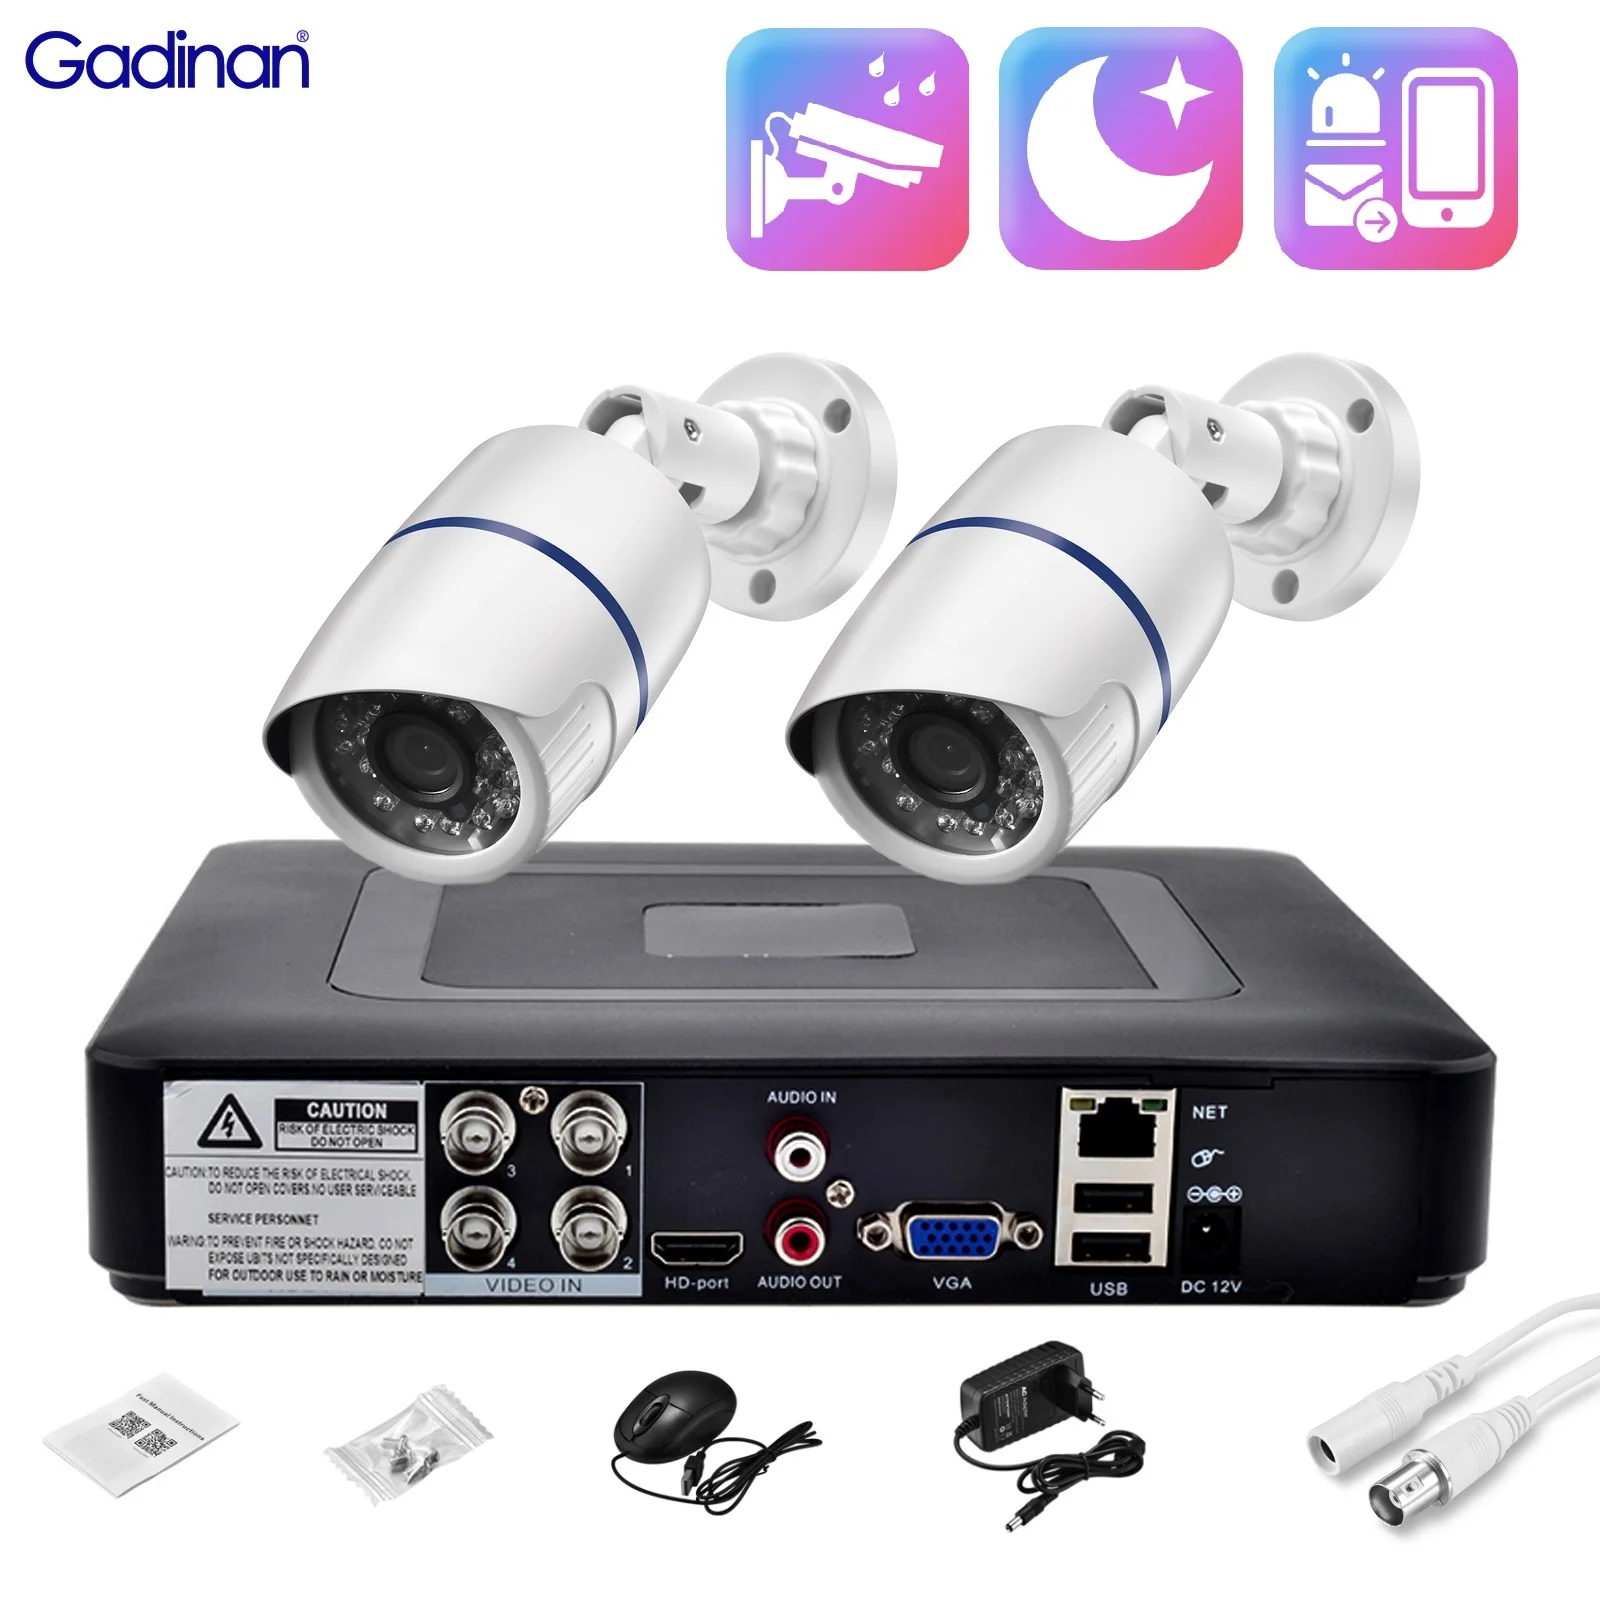 

Gadinan 5MP AHD Outdoor Camera System 4CH AHD DVR CCTV Camera Kit Infrared Night Vision P2P Surveillance Security System Set